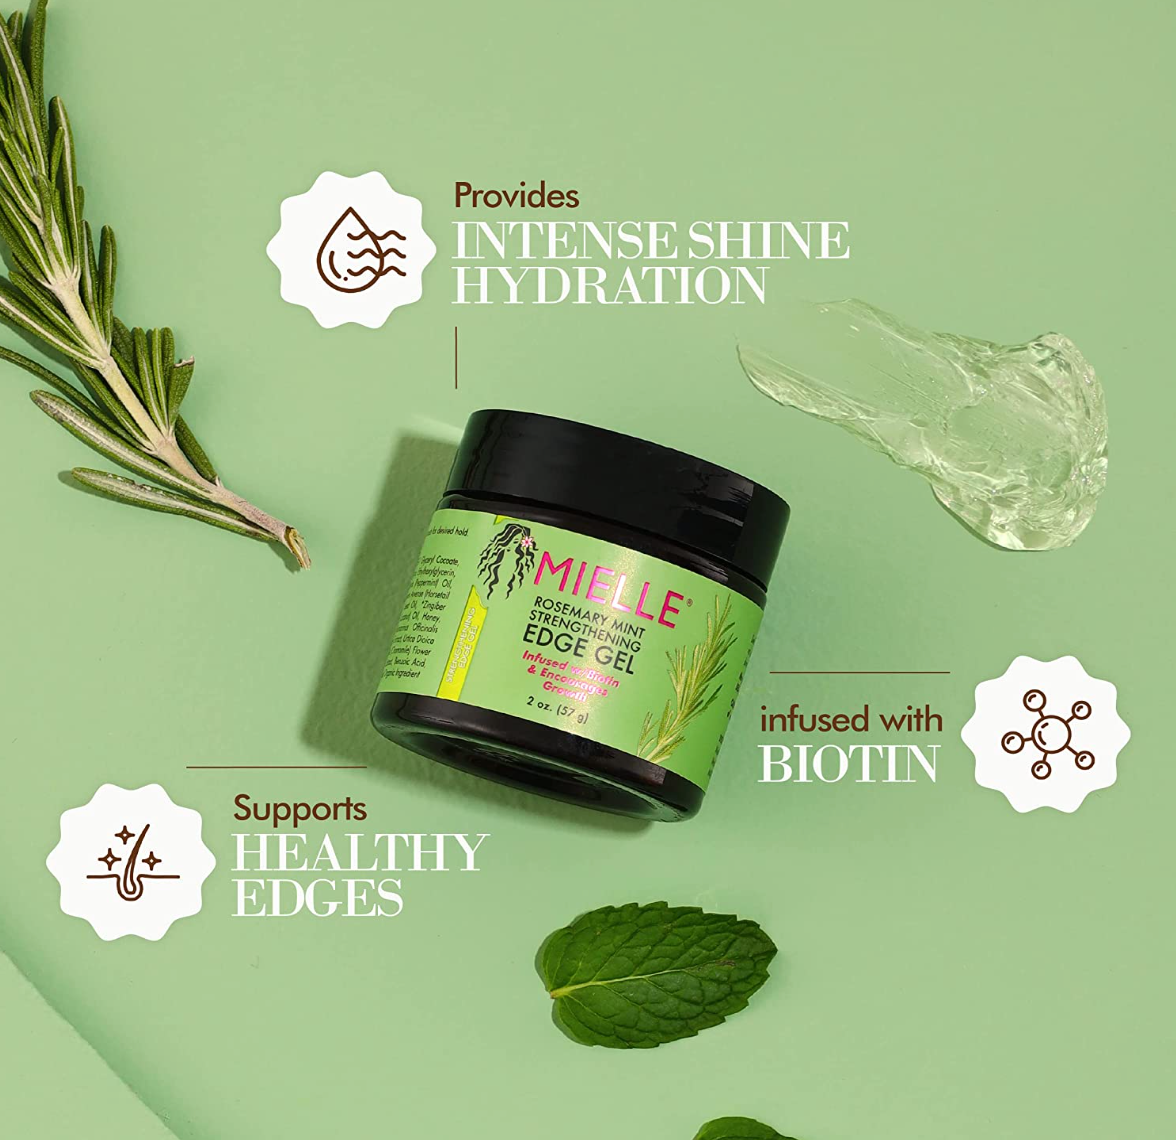 Mielle Organics Rosemary Mint Strengthening Edge Gel, Biotin & Essential Oil Hair Styling Treatment, 2 Ounces